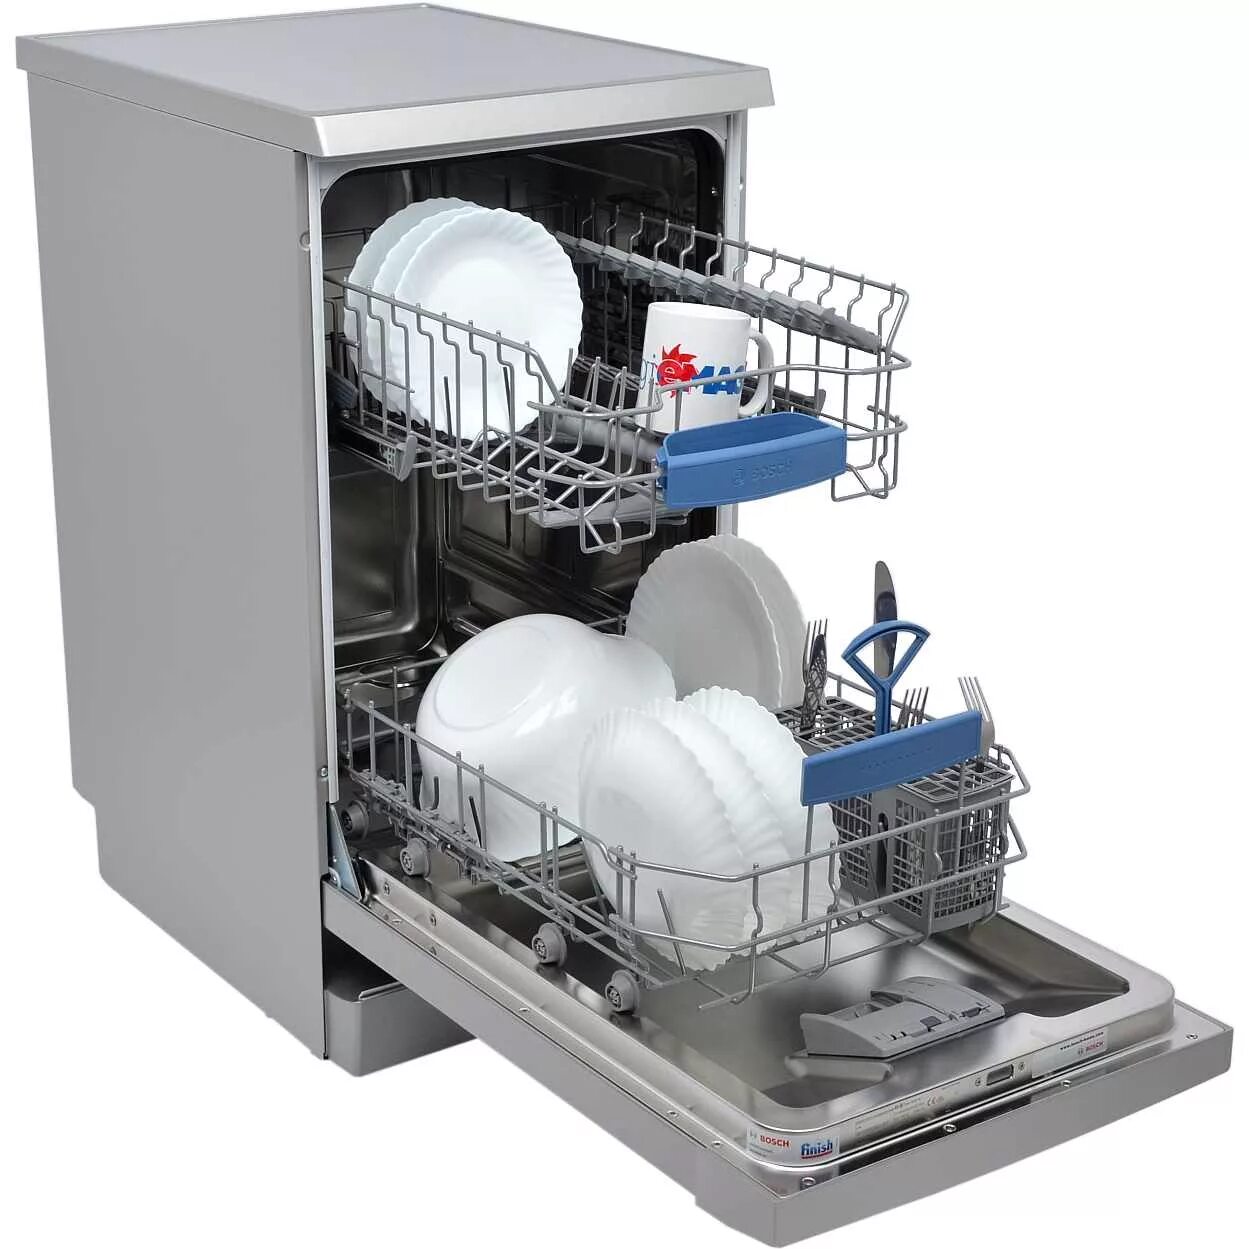 Посудомоечная машина Bosch sps2ikw1br. Посудомоечная машина Neff s855hmx50r. ПММ бош sps53. Посудомоечная машина Bosch spv6hmx1mr.